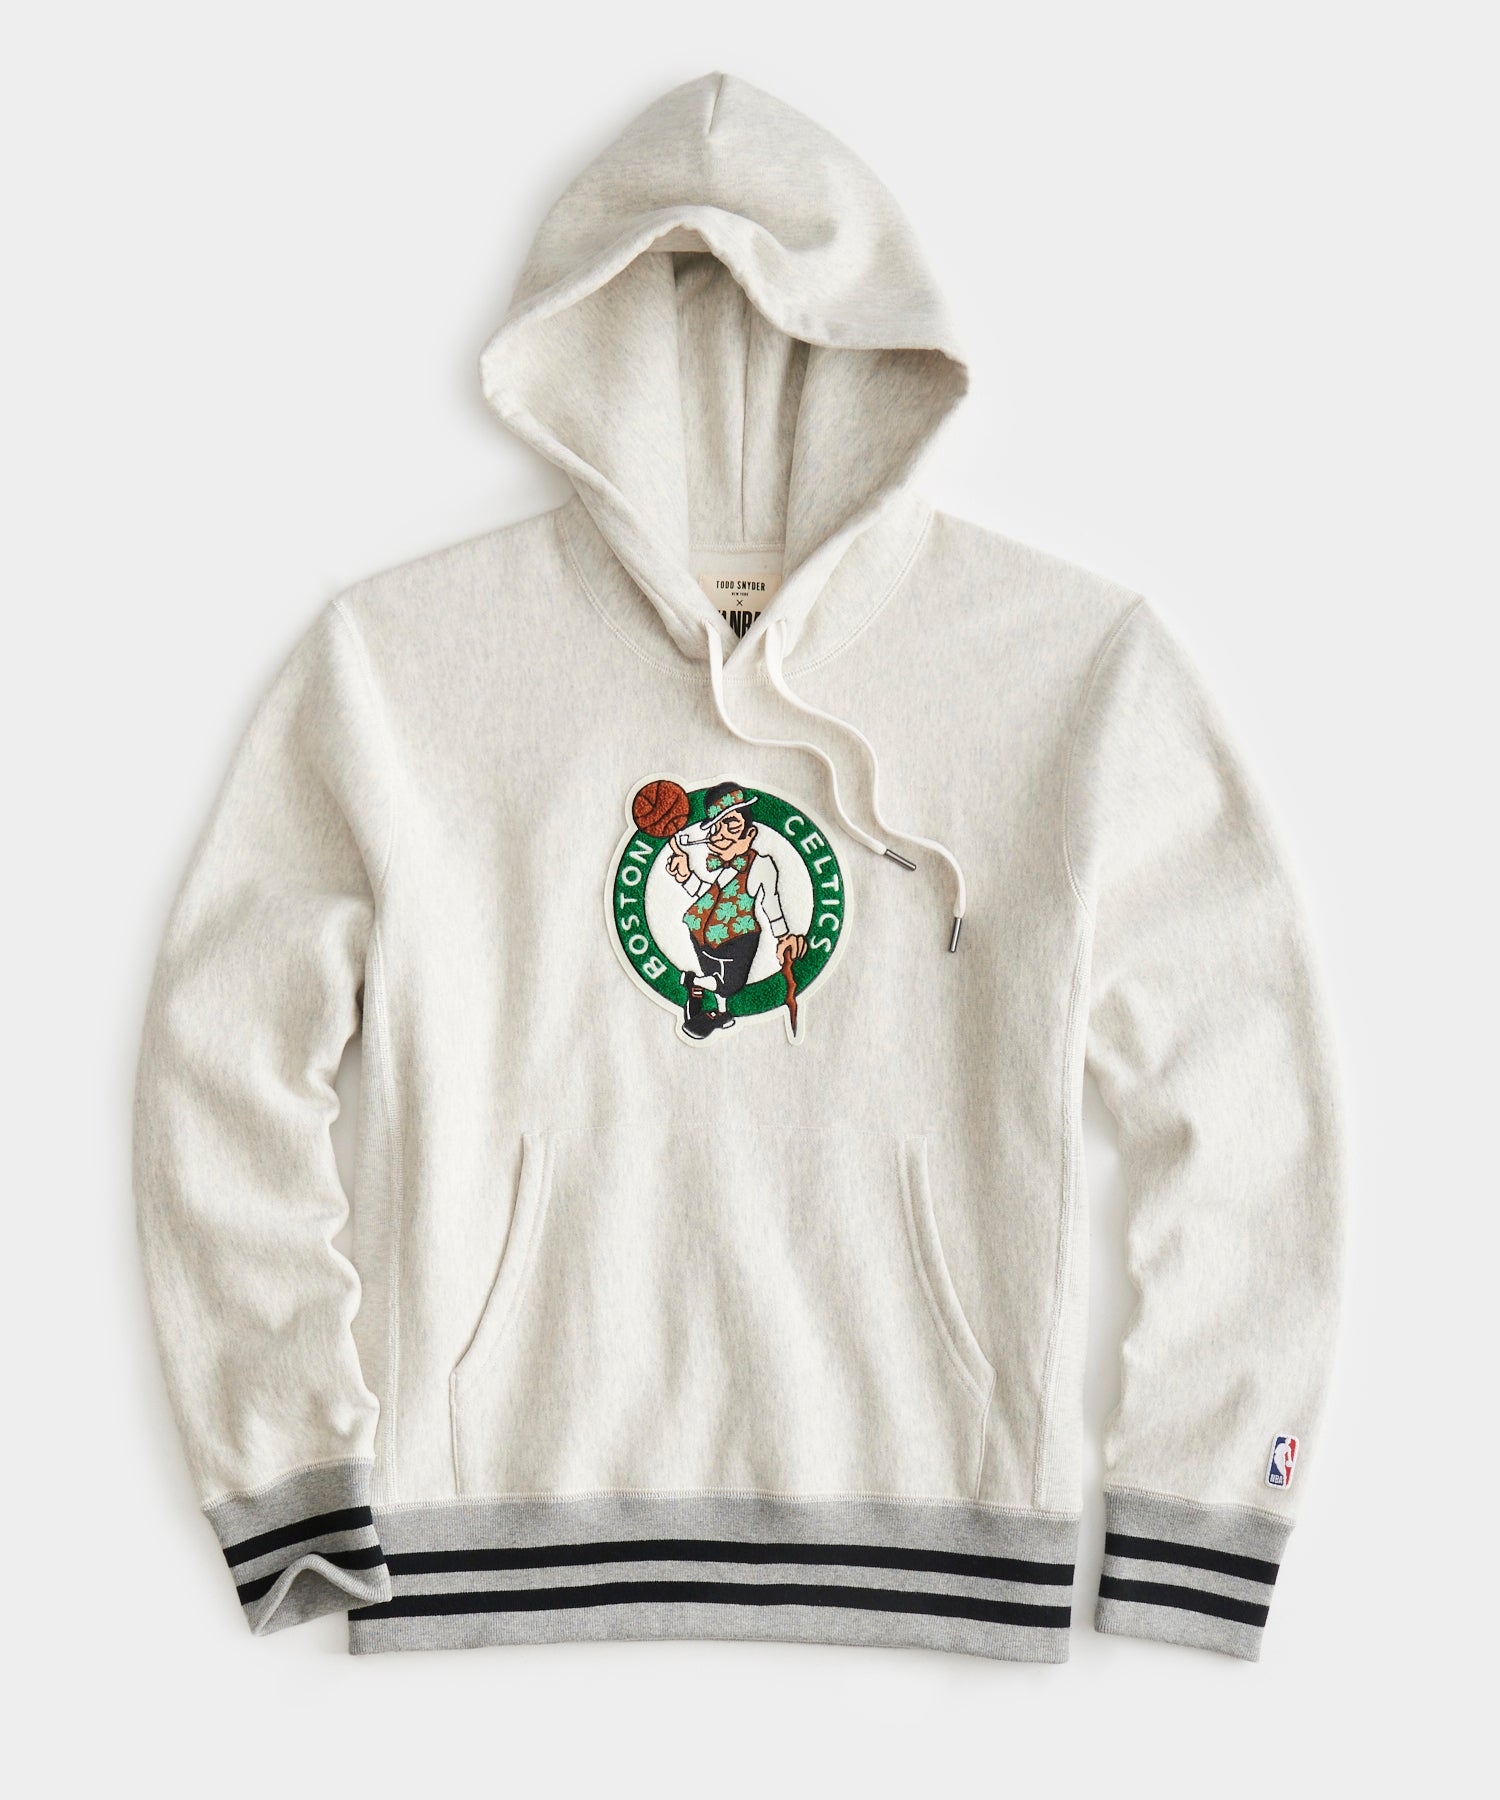 Majestic, Tops, Womens Hooded Boston Celtics Sweatshirt